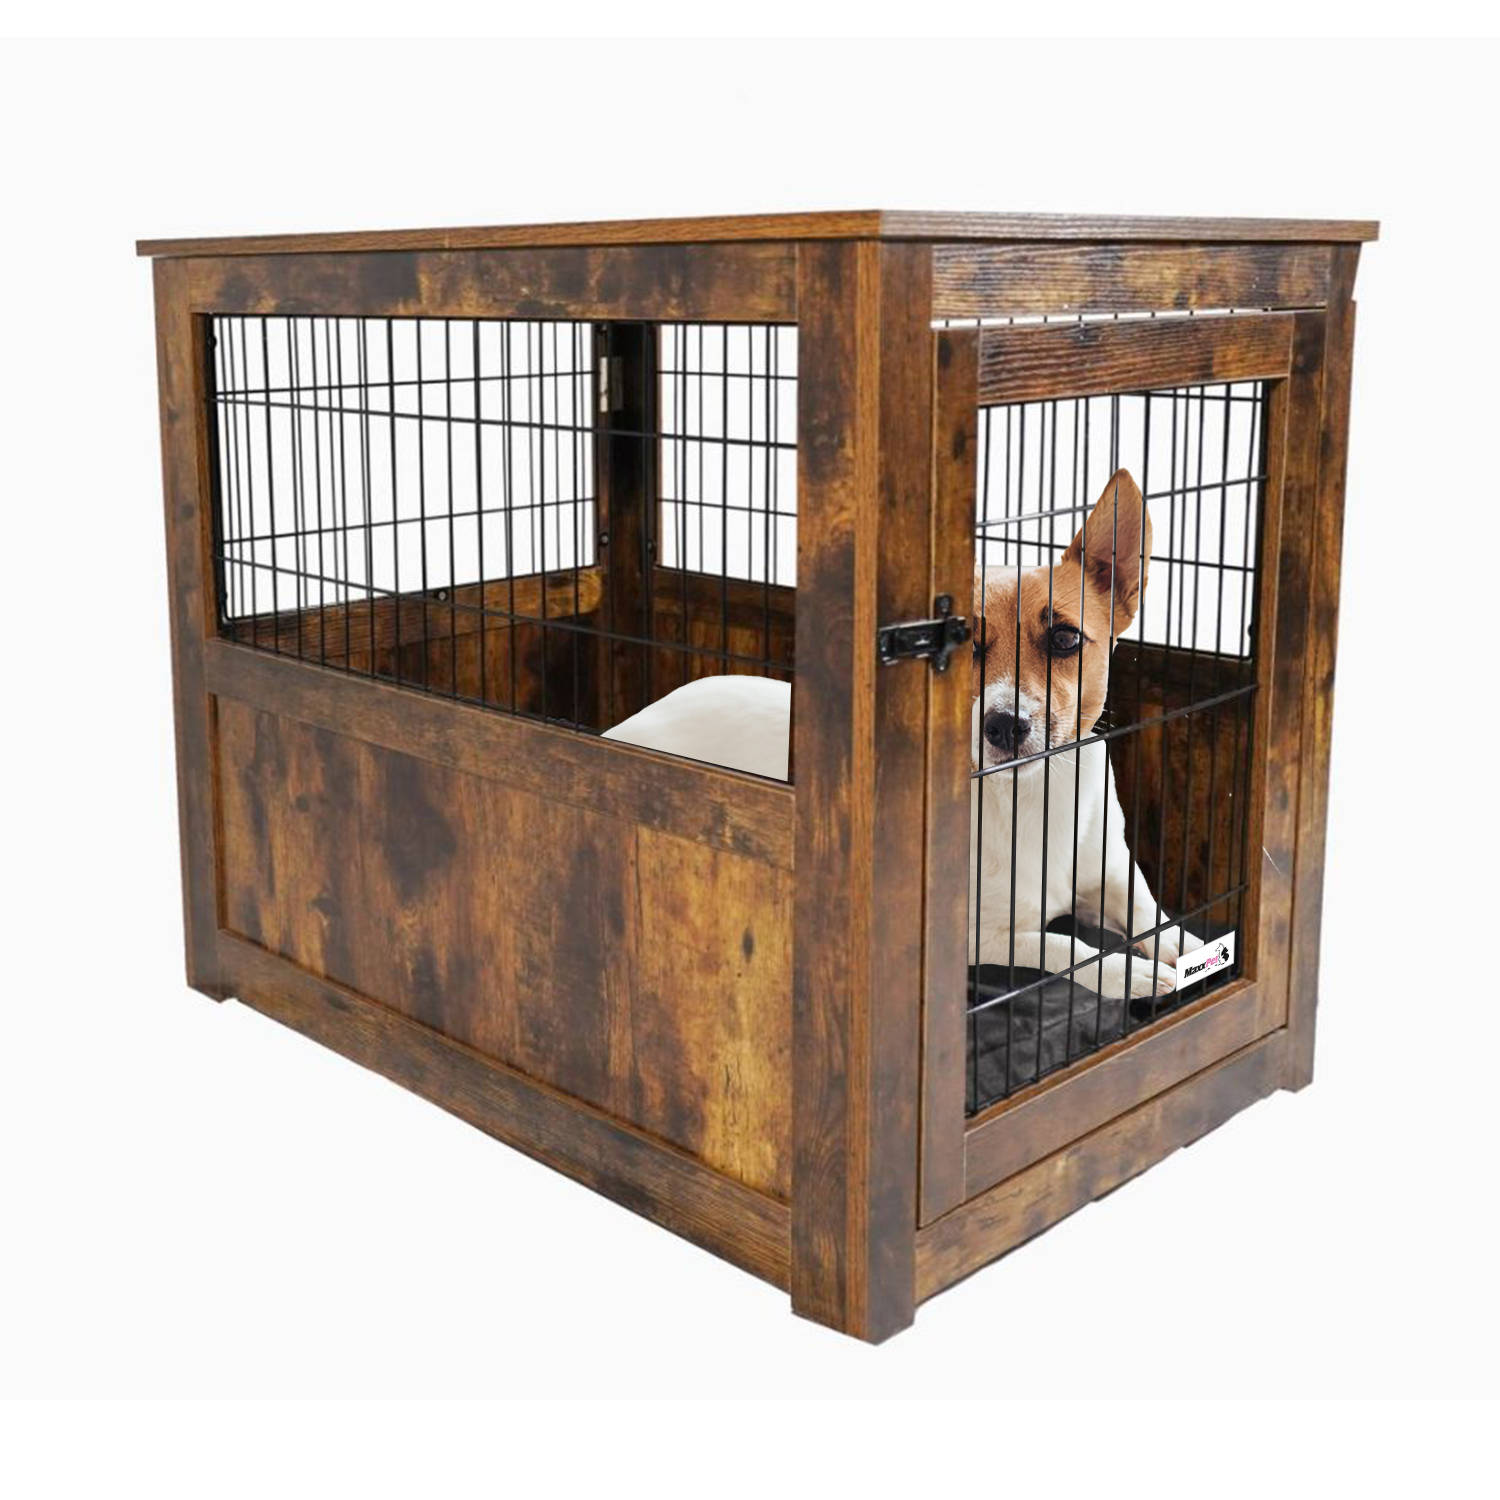 MaxxPet Houten Hondenbench - Hondenhuisje voor binnen - Hondenhok - kennel - 89x61x72cm